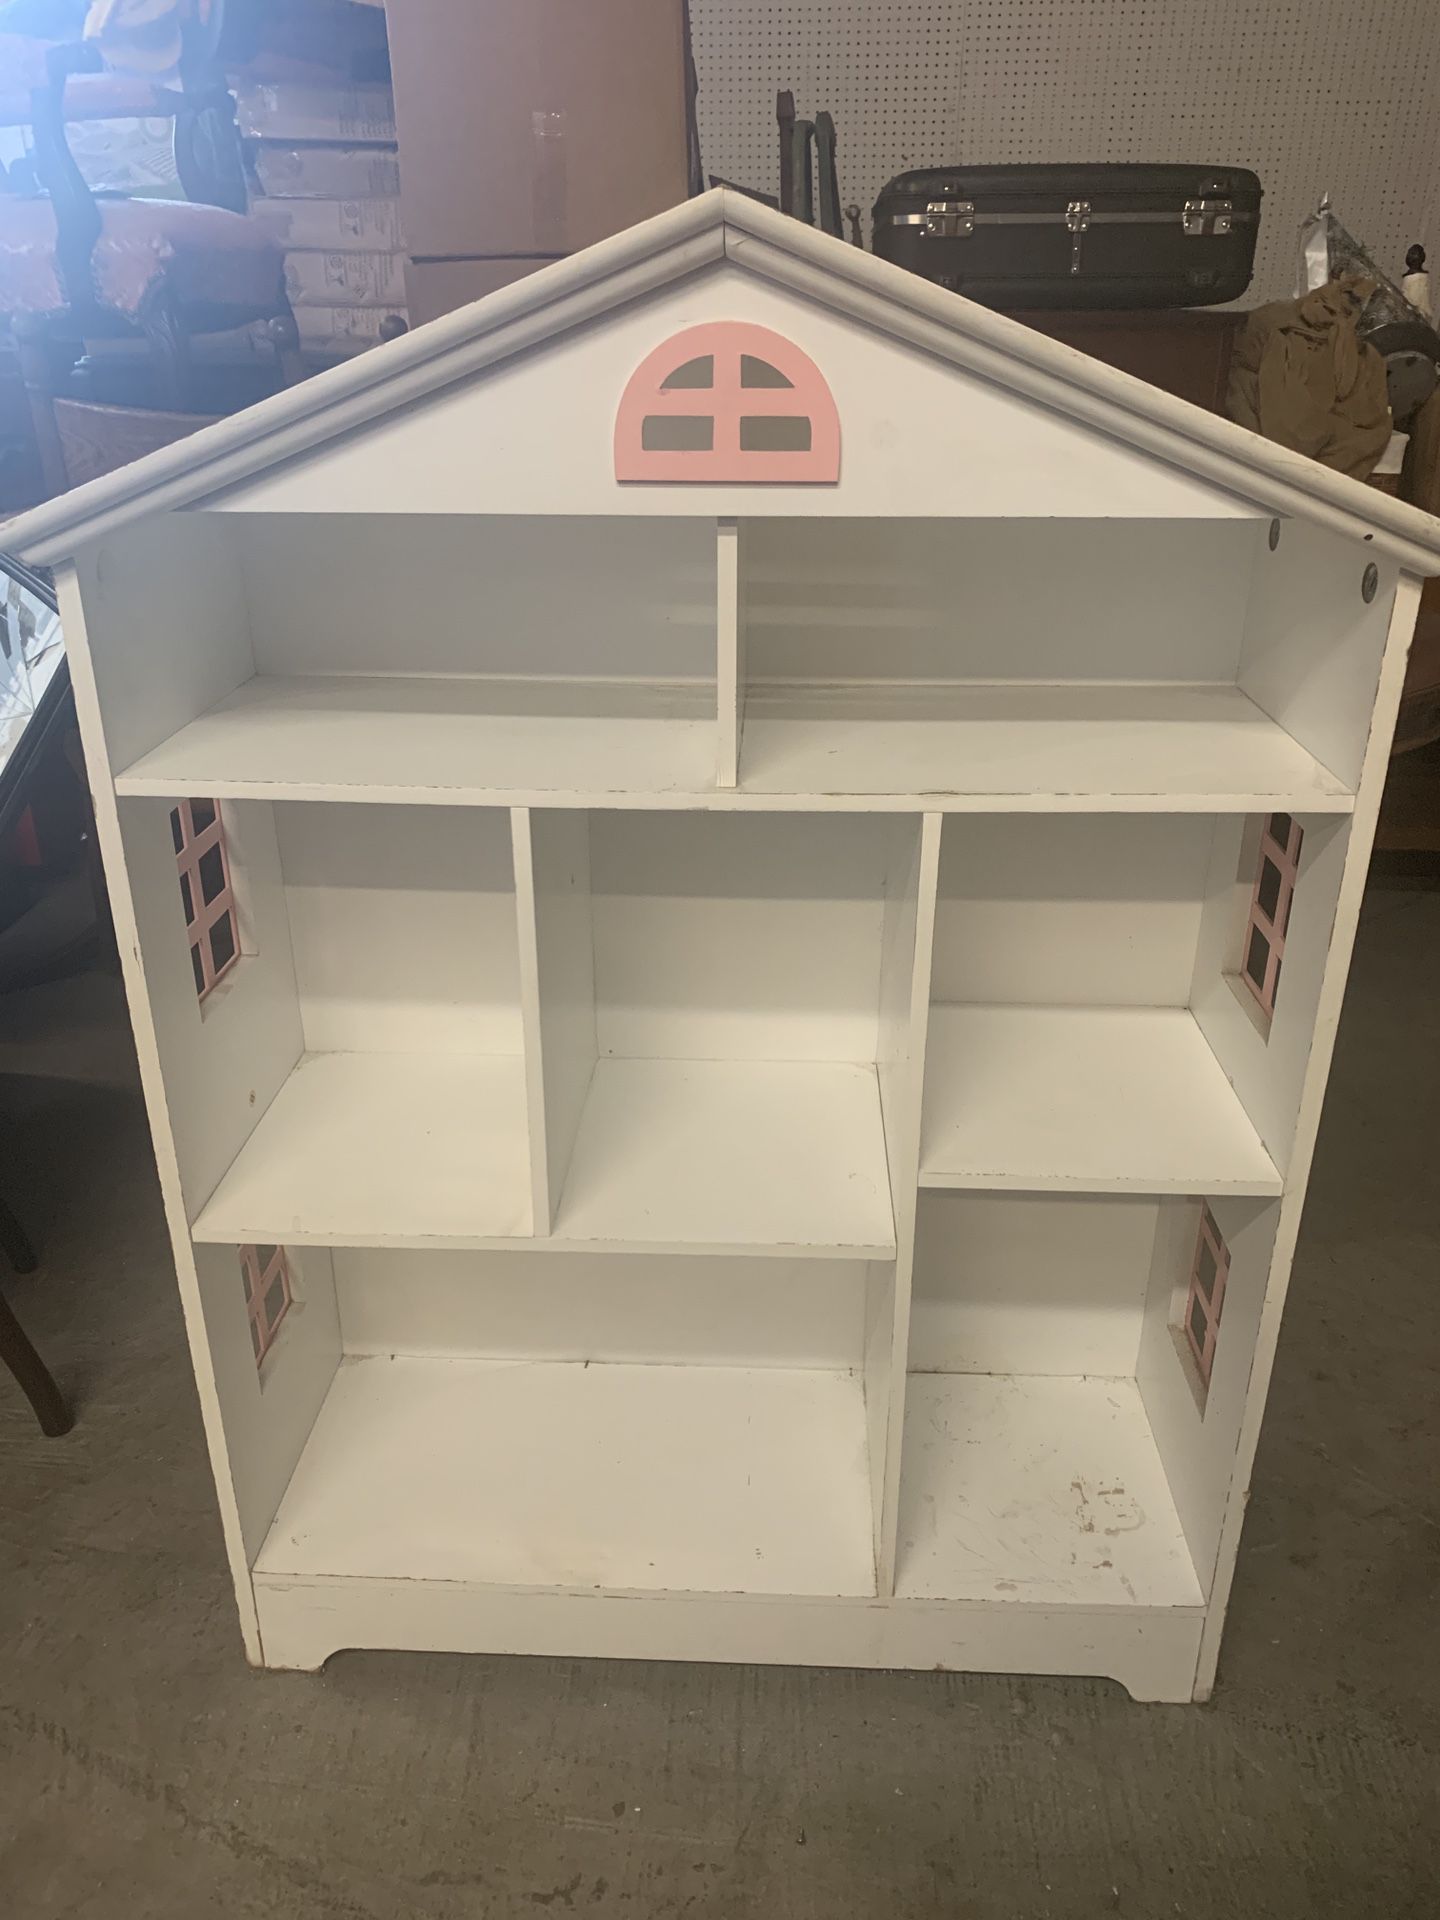 Adorable Unique Doll House, Bookshelf or Decor Display Cabinet